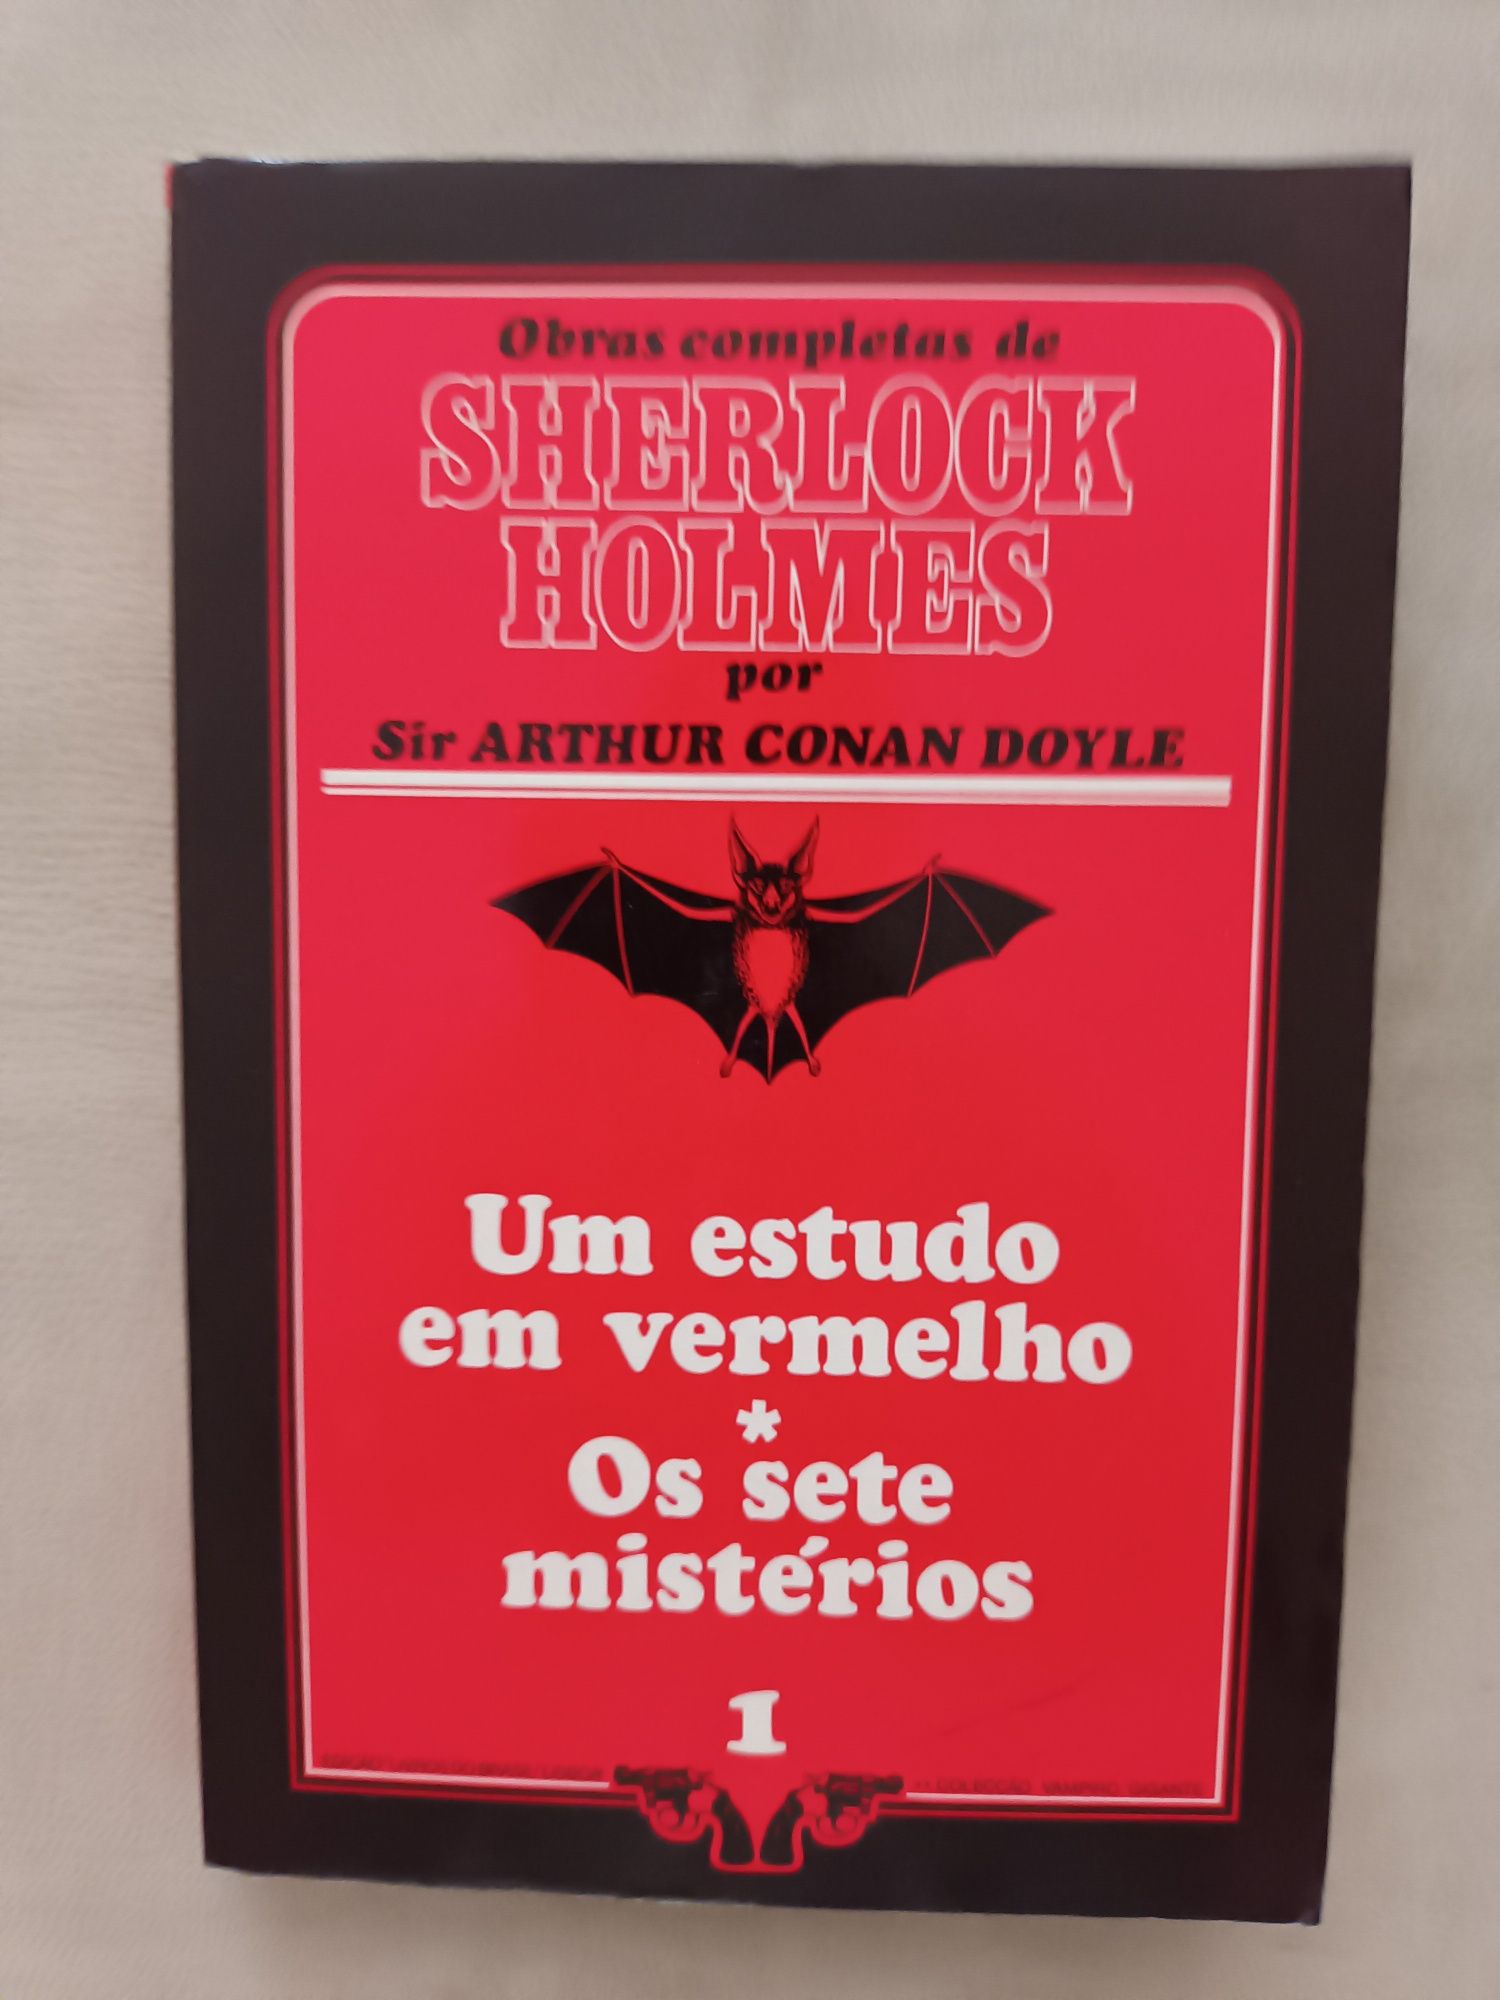 Obras completas de Sherlock Holmes, de Sir Arthur Conan Doyle